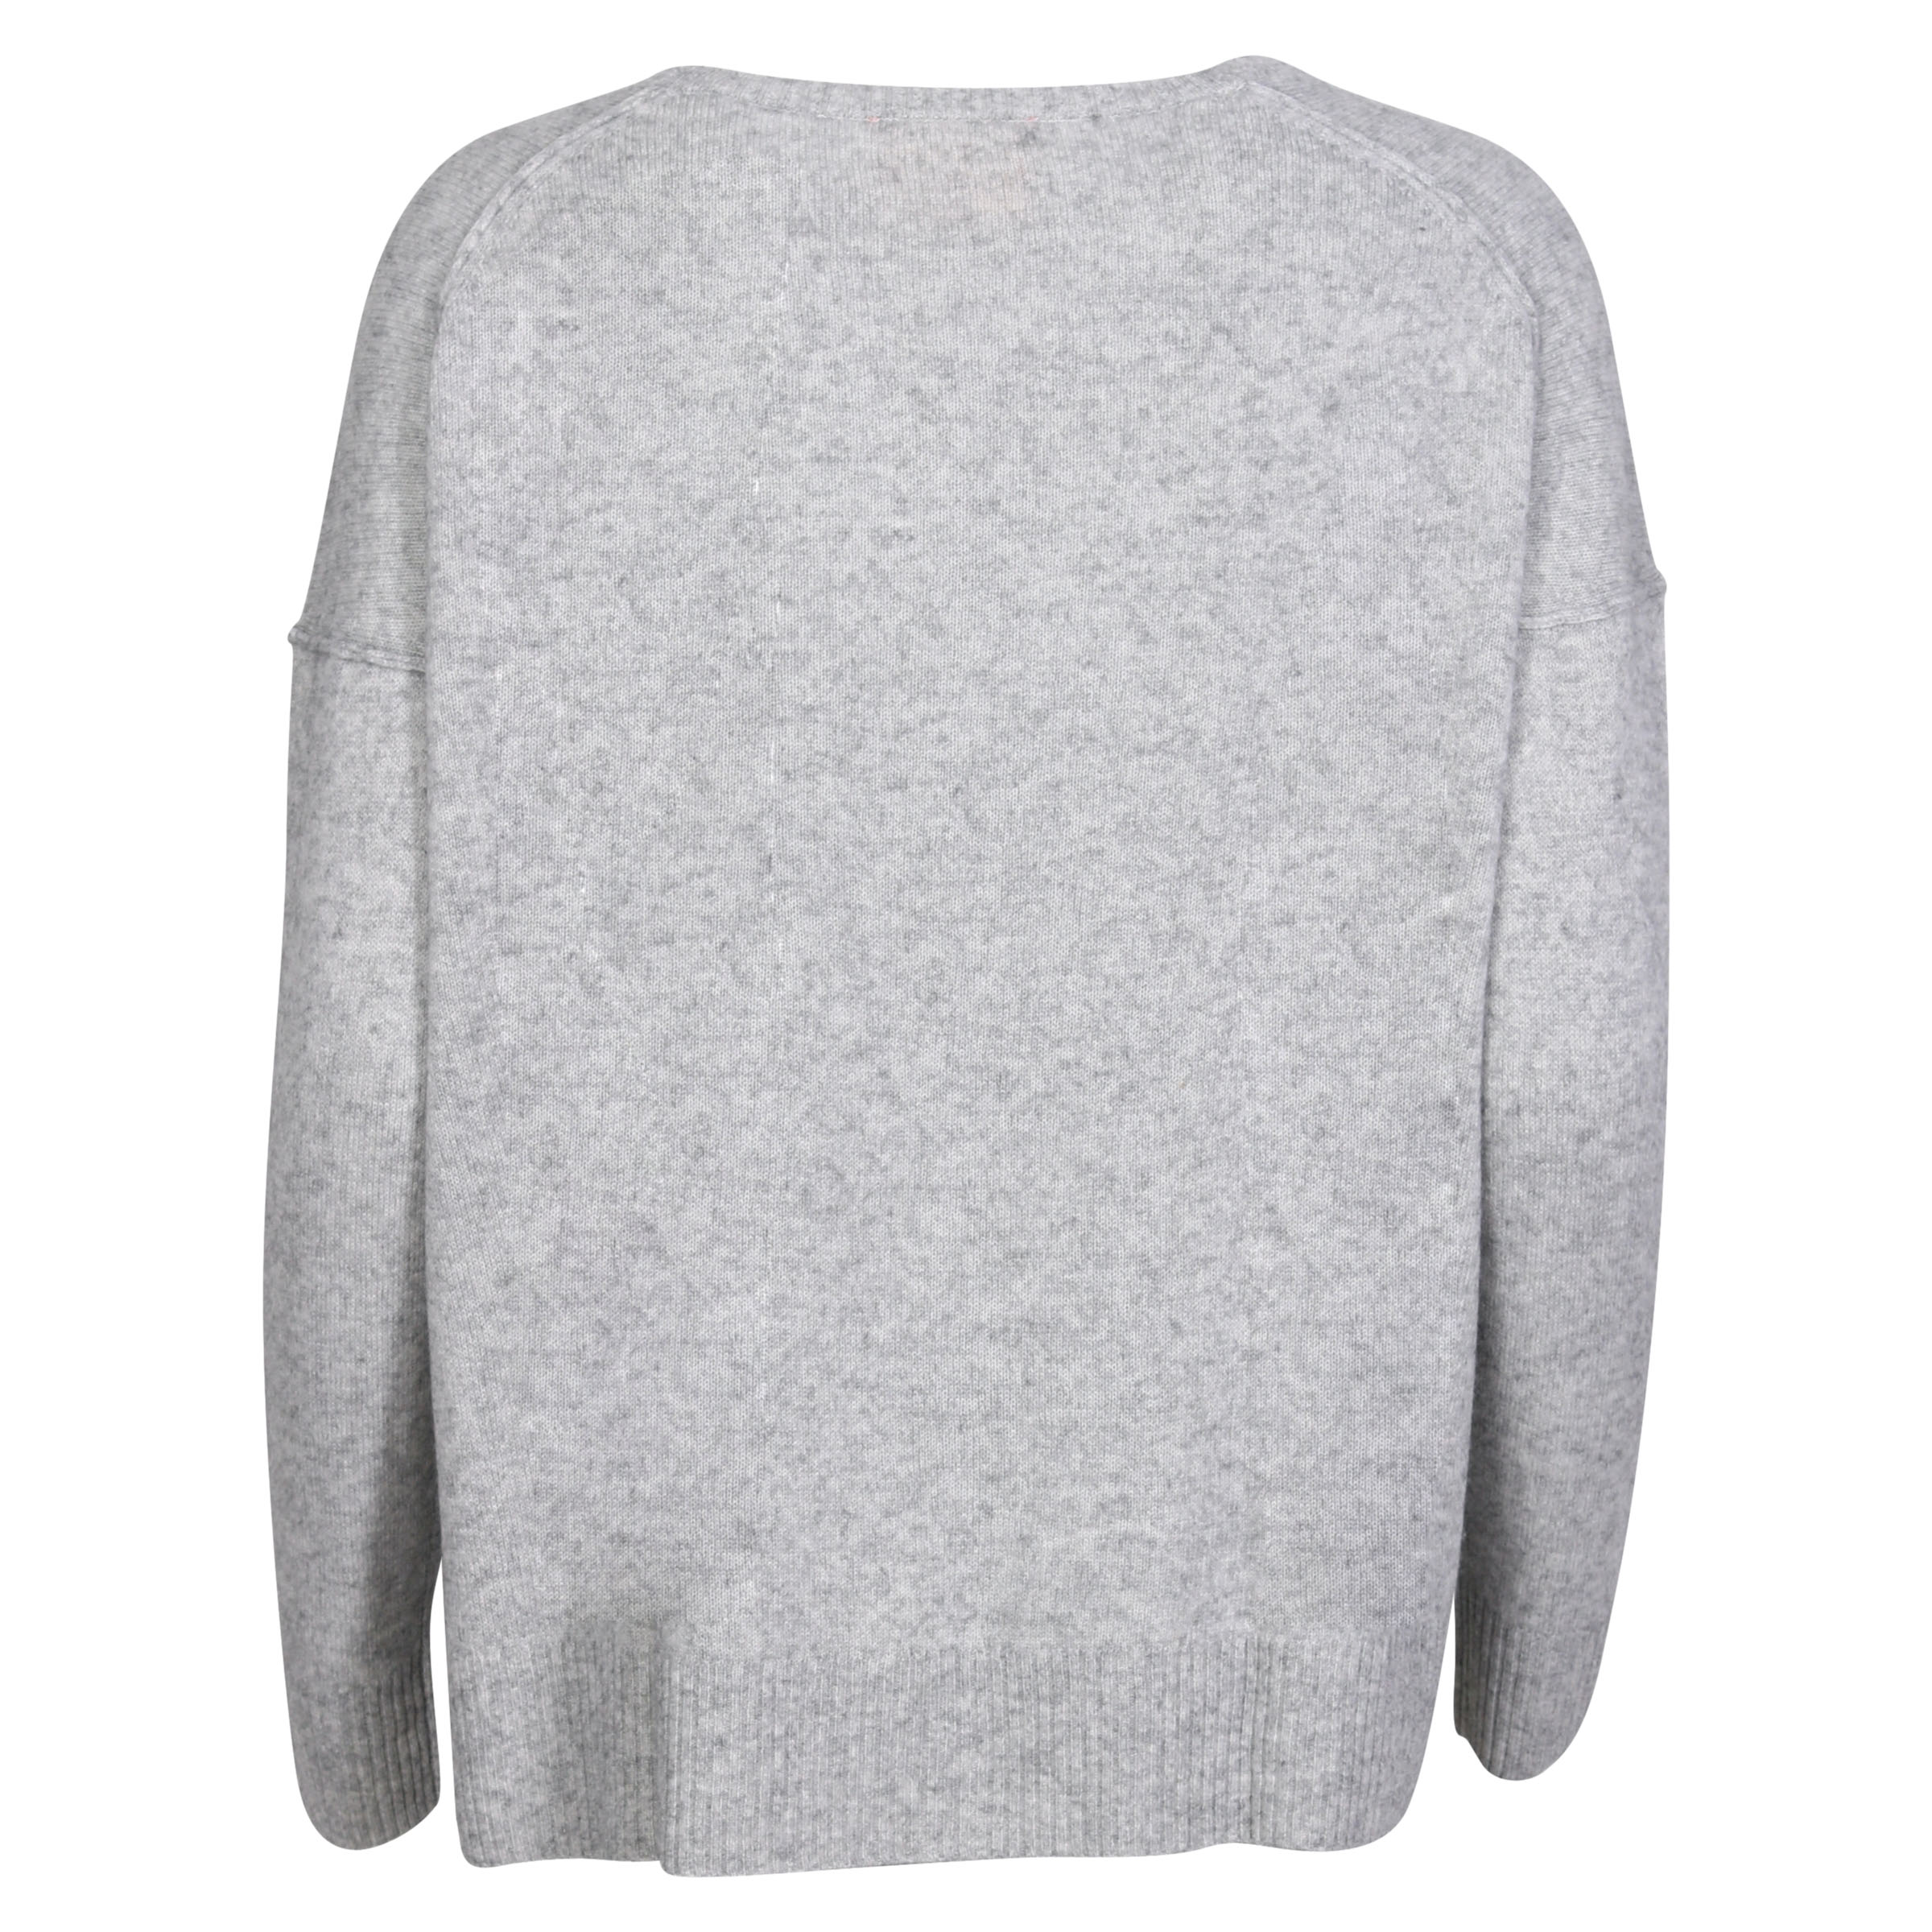 Absolut Cashmere Oversized Sweater Kenza Light Grey Melange S